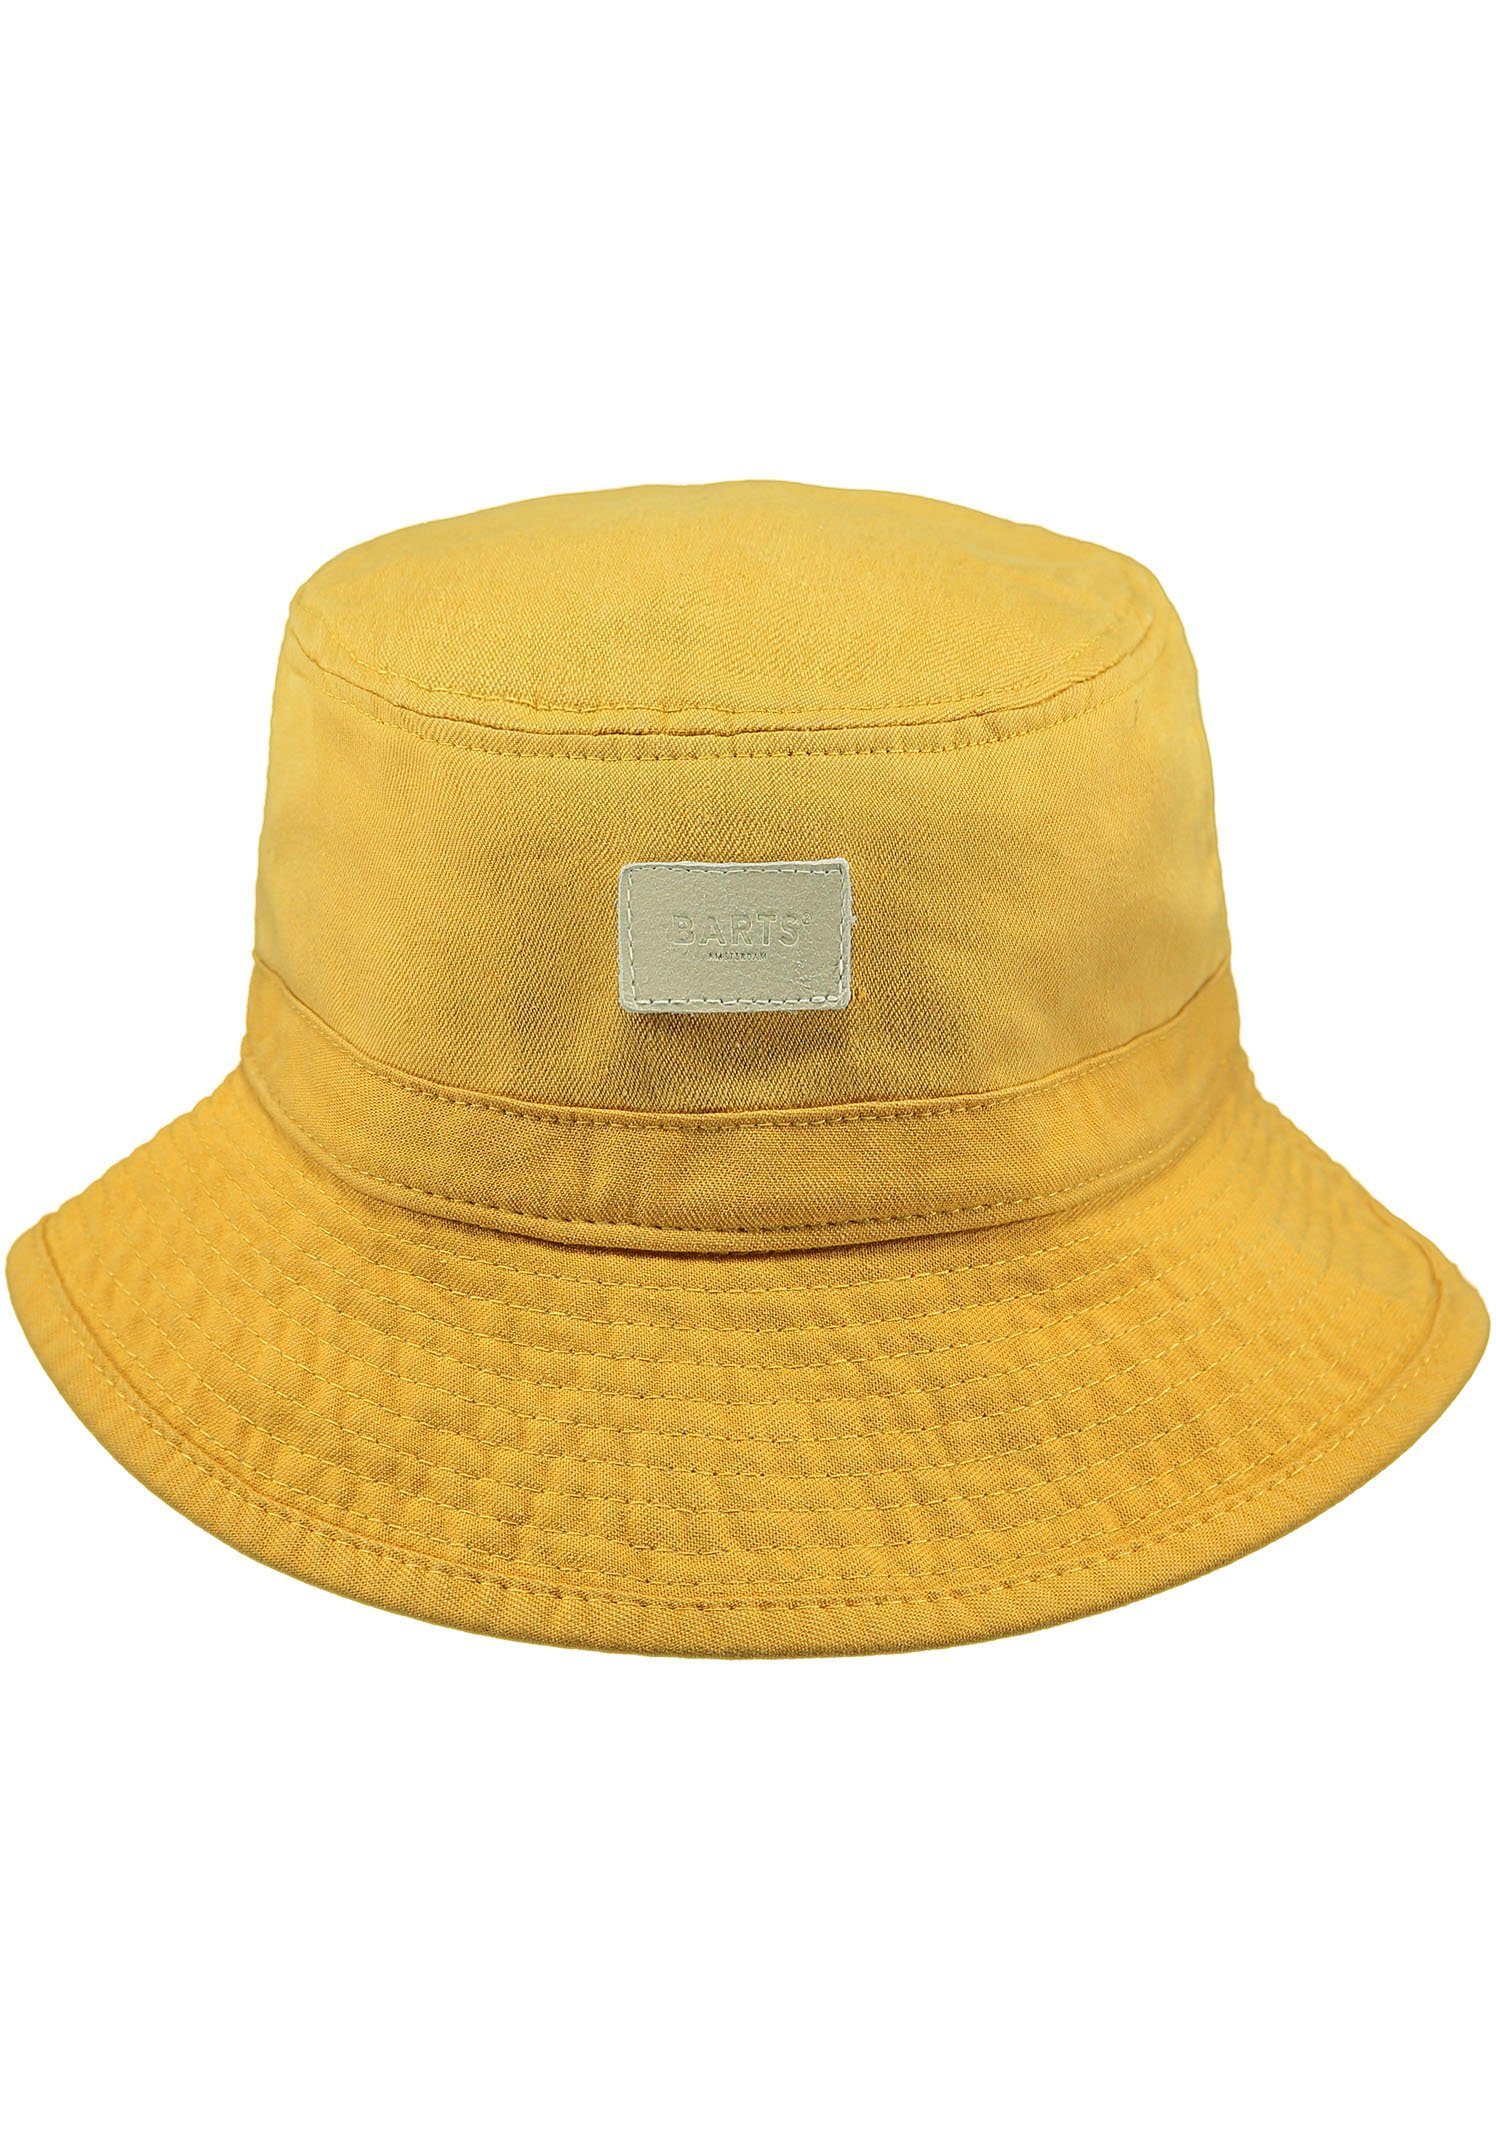 Fischerhut yellow Hat Barts Orohena